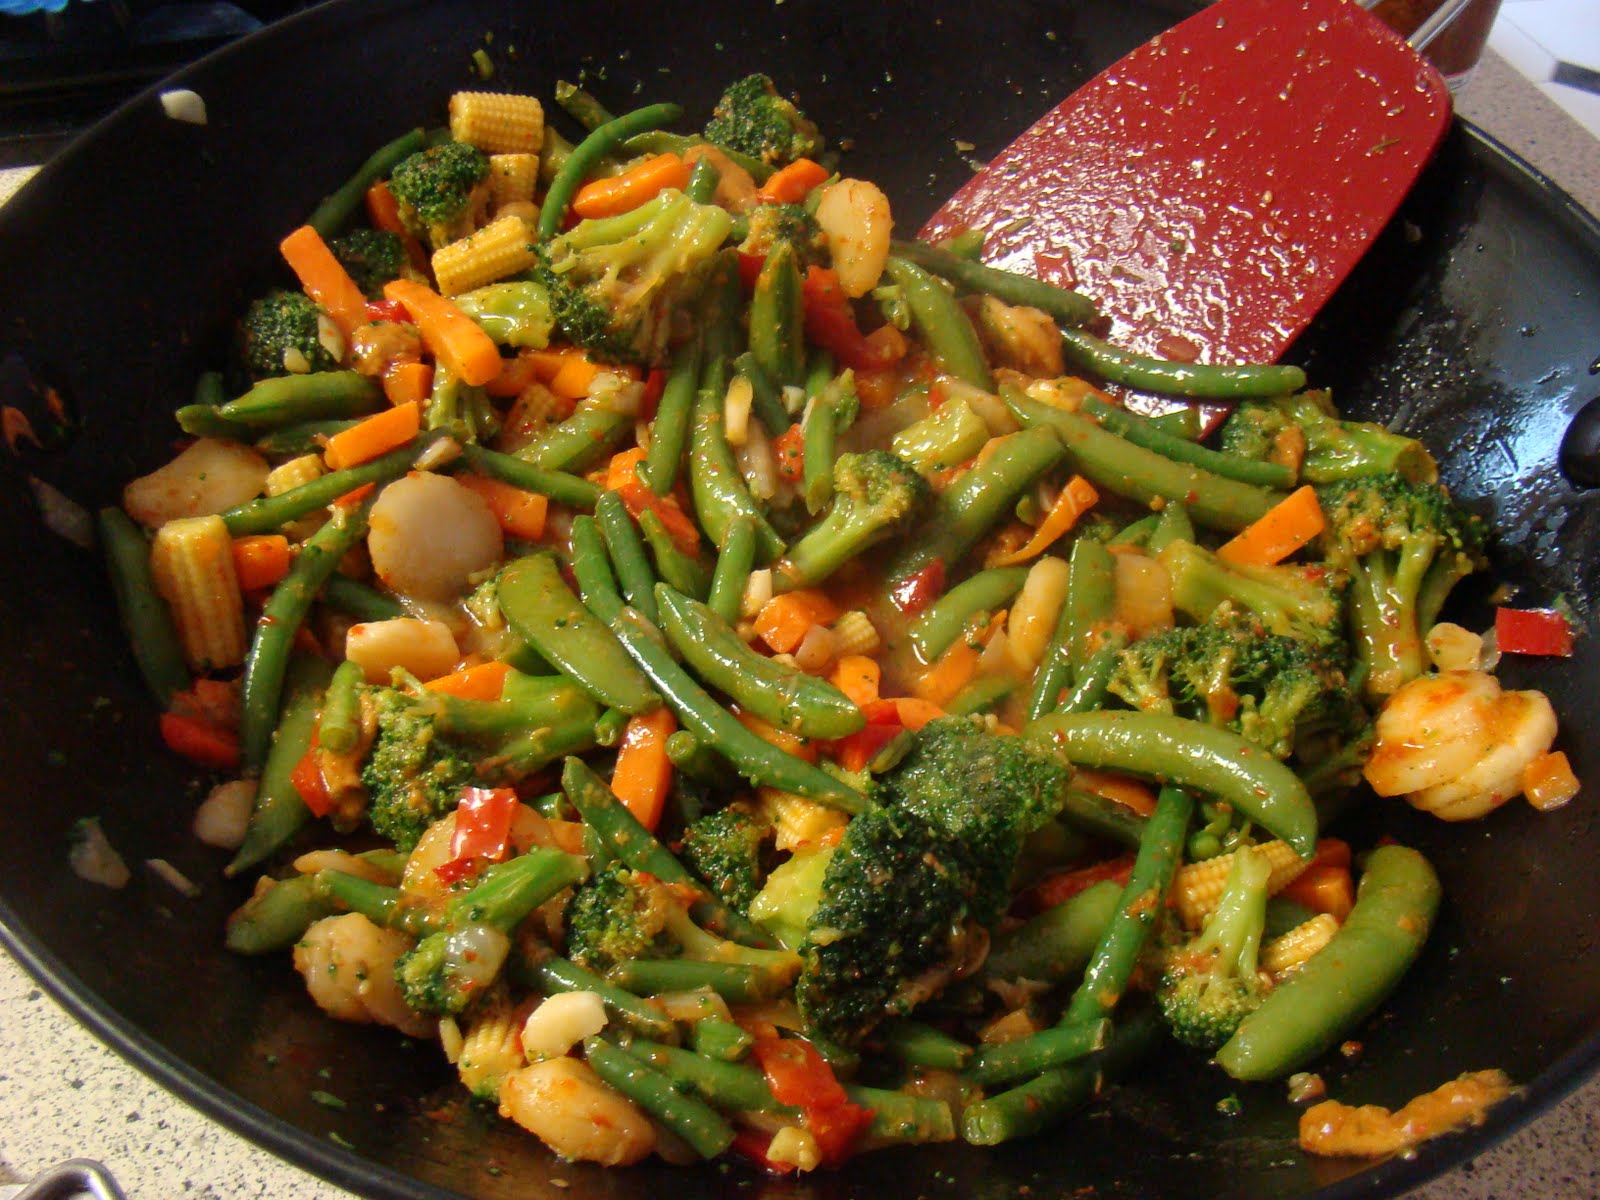 Жареные овощи на сковороде рецепт